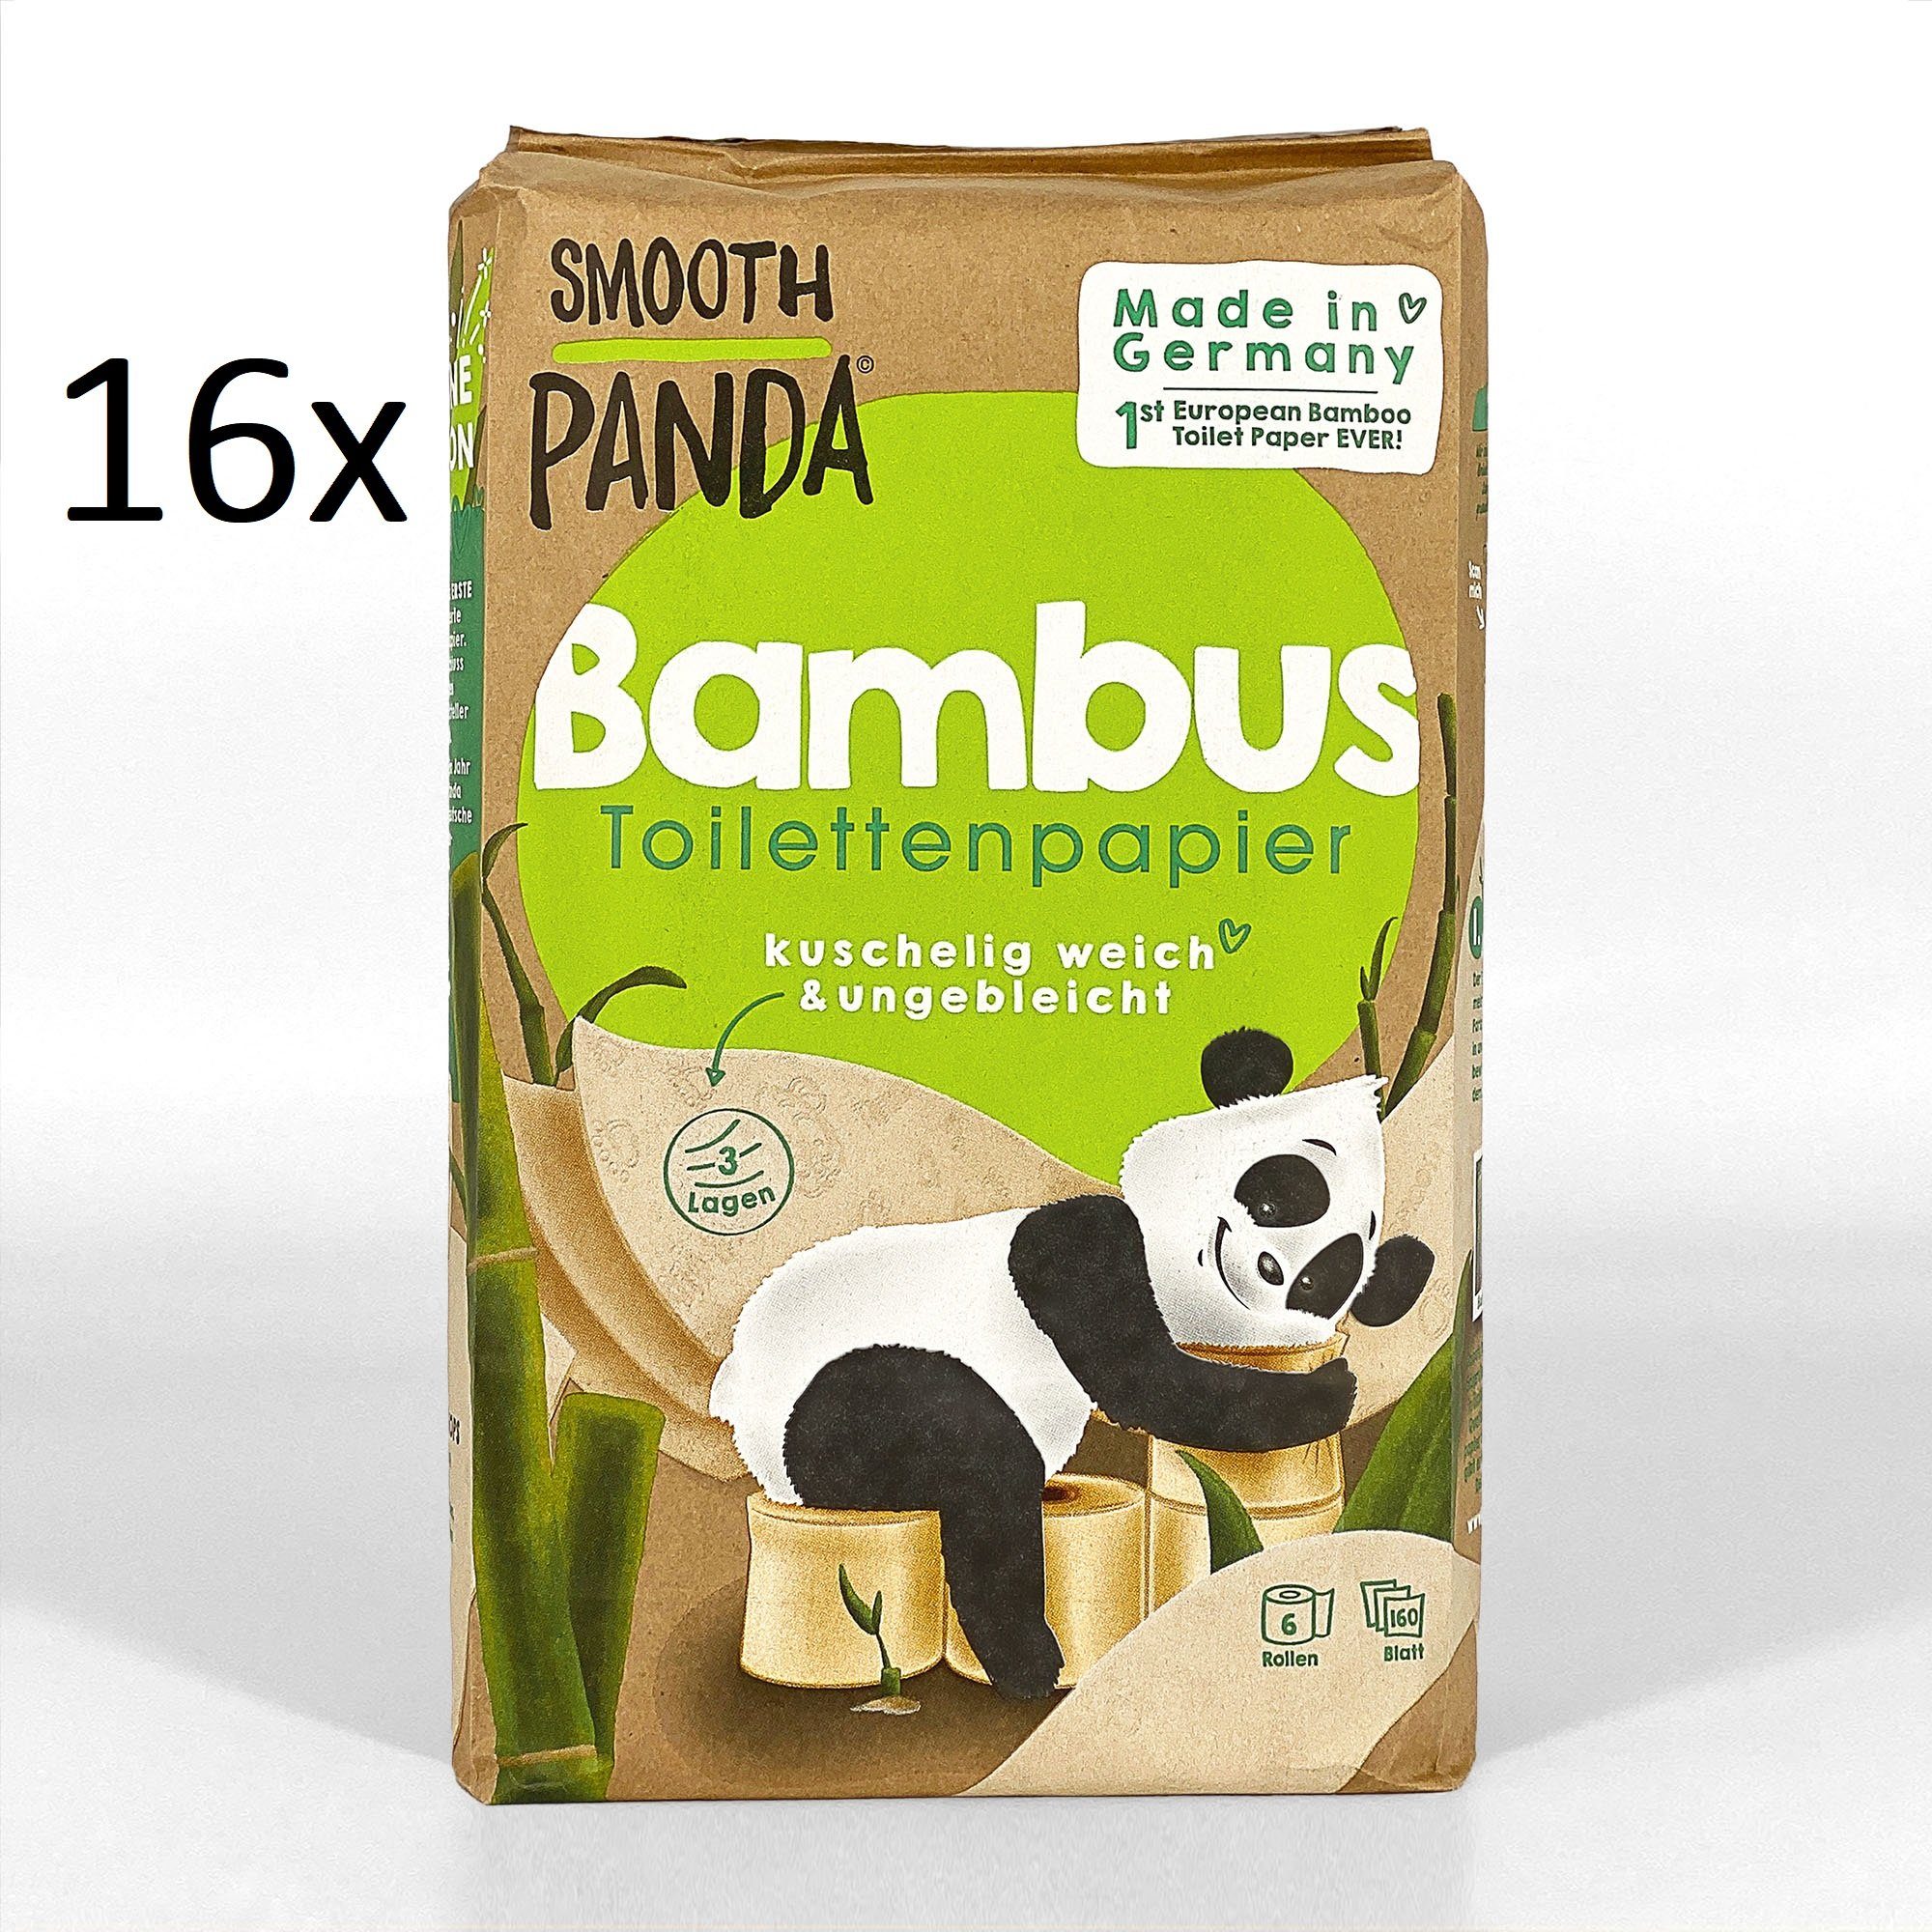 Smooth Panda Toilettenpapier Bambus Toilettenpapier Made in Germany – 96  Rollen (Familienpackung)